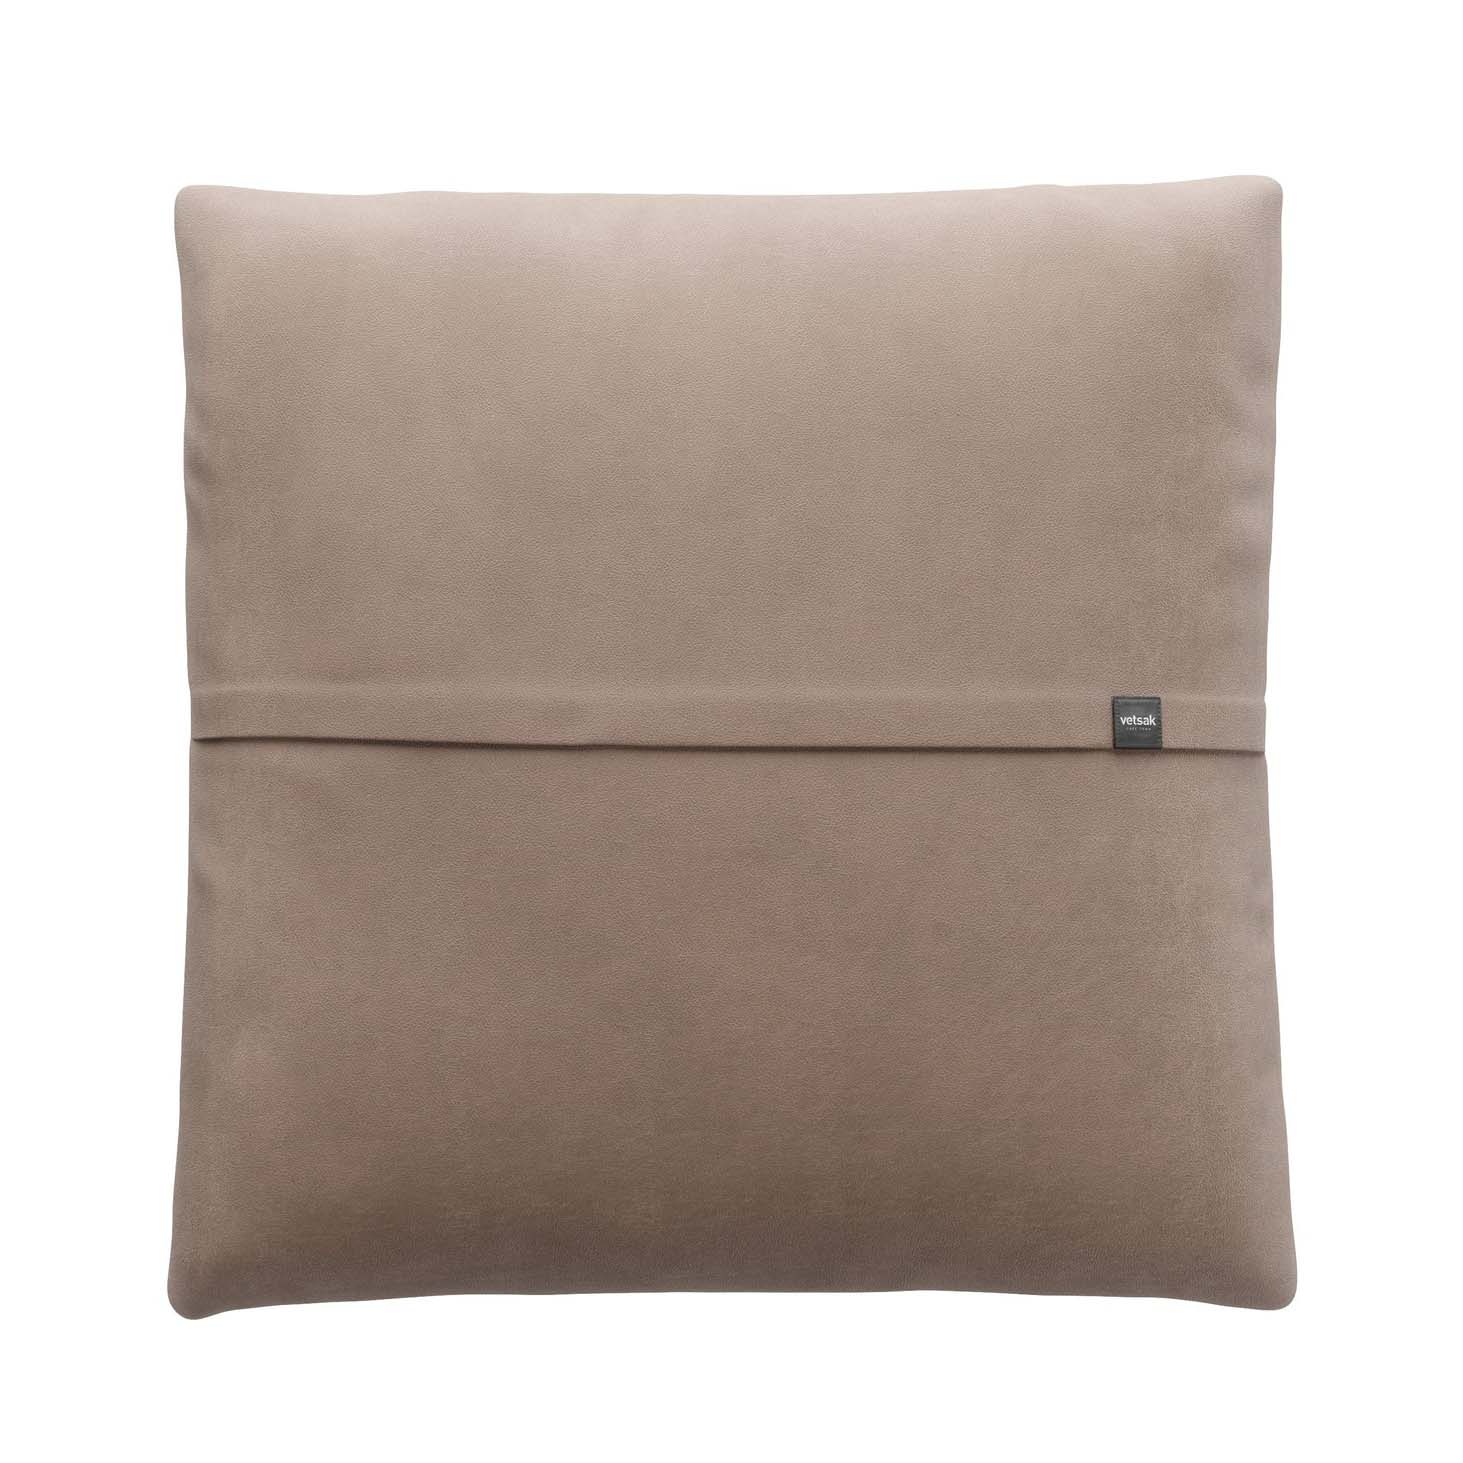 Jumbo Pillow Leather Stone